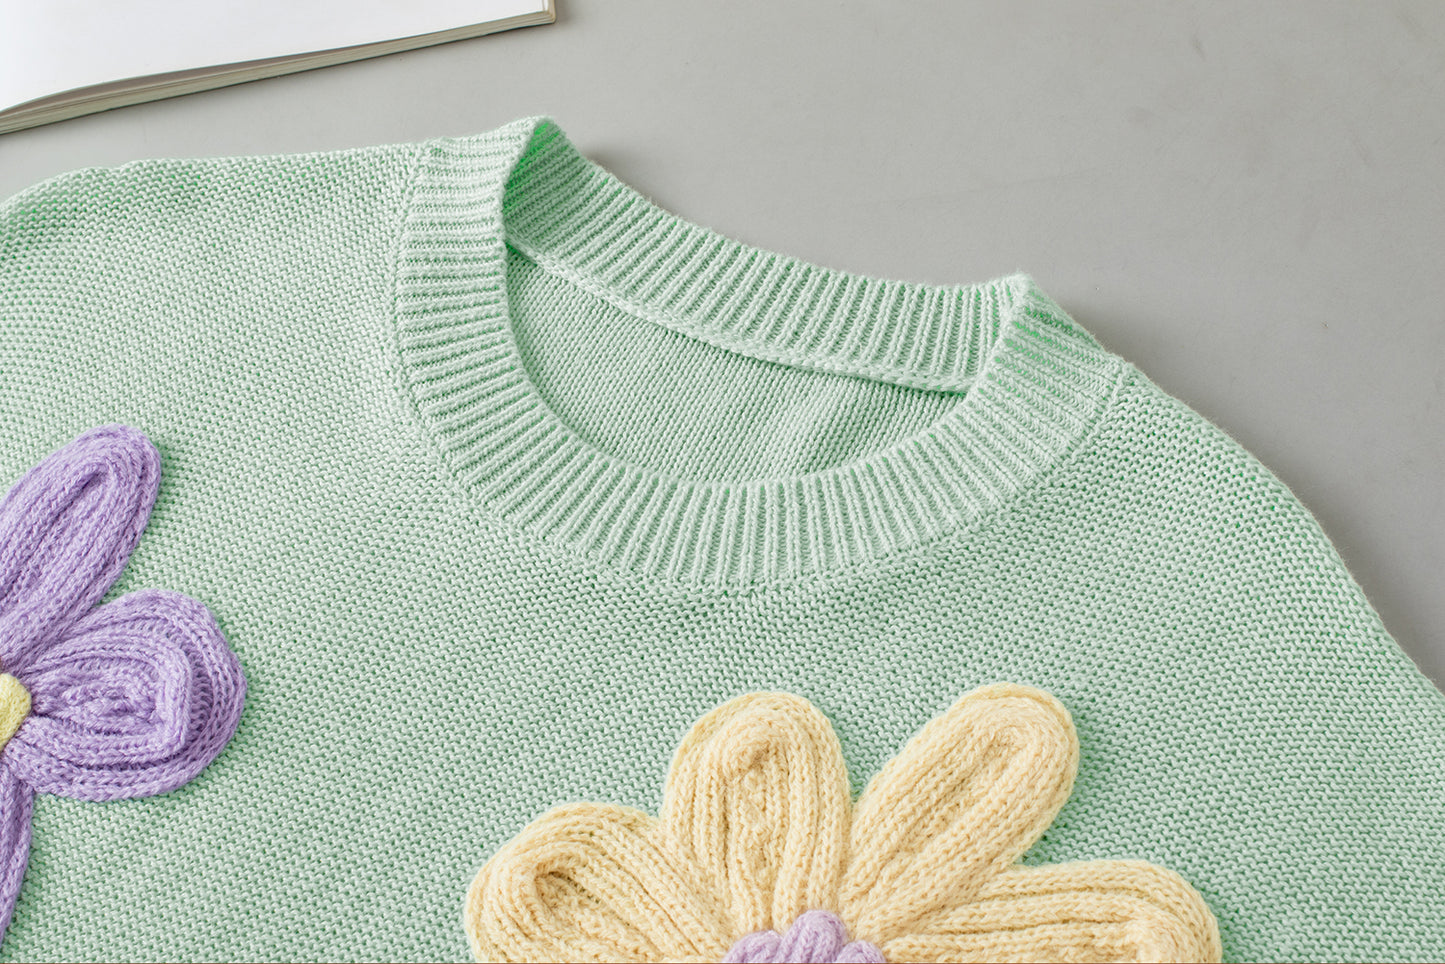 Moonlight Jade Multi Crochet Flower Knit Short Sleeve Sweater Top